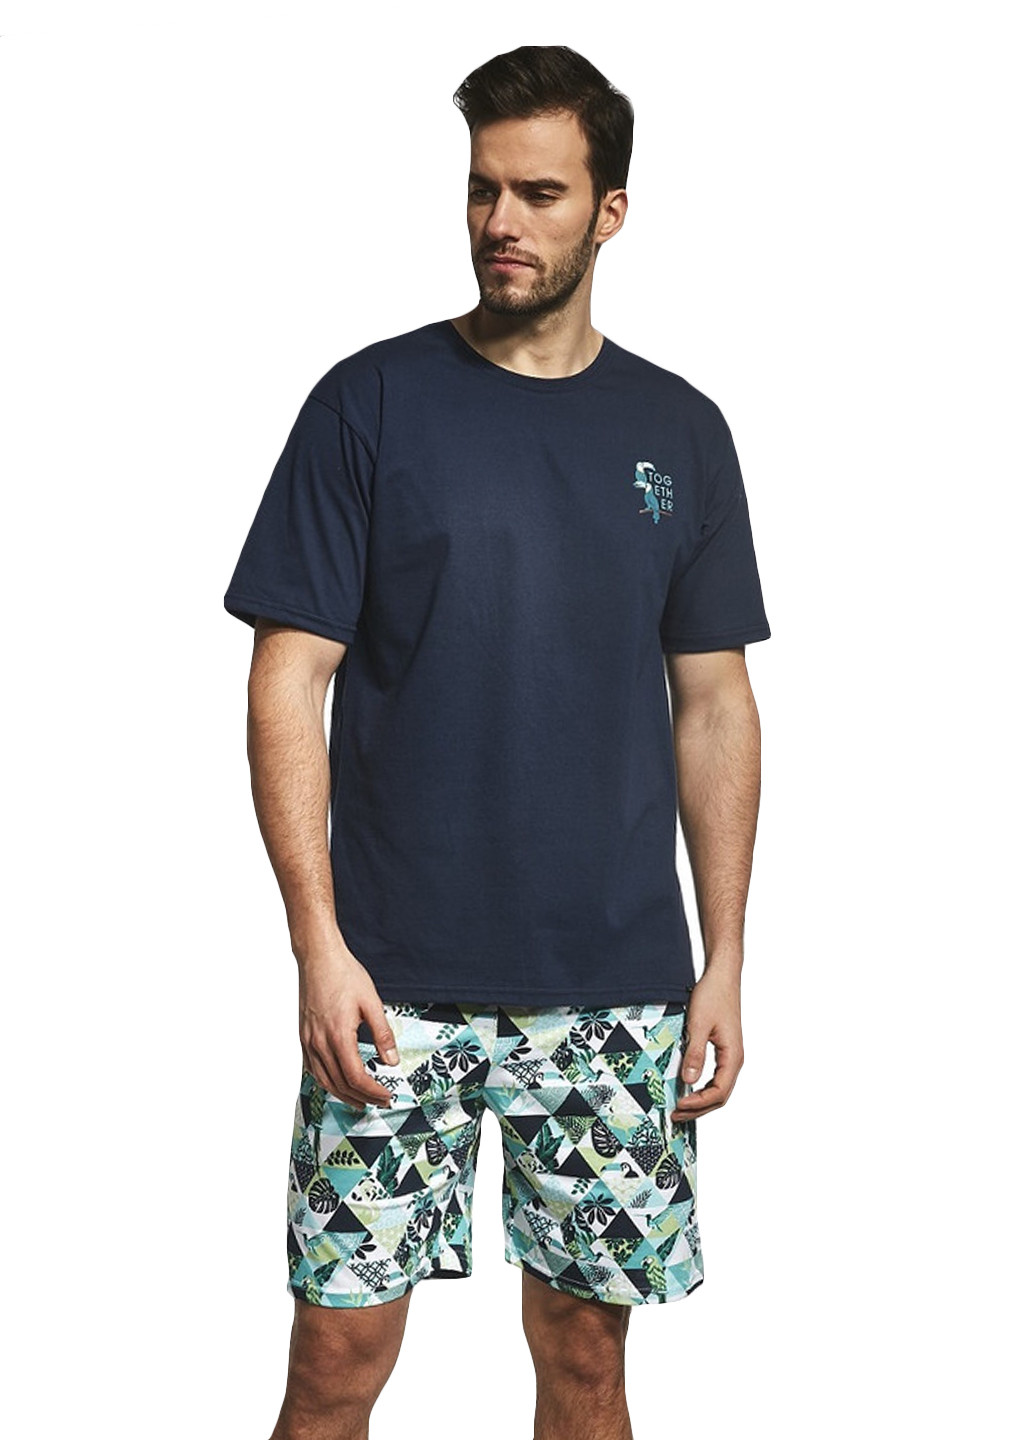 Пижама (футболка, шорты) Cornette геометрическая тёмно-синяя домашняя